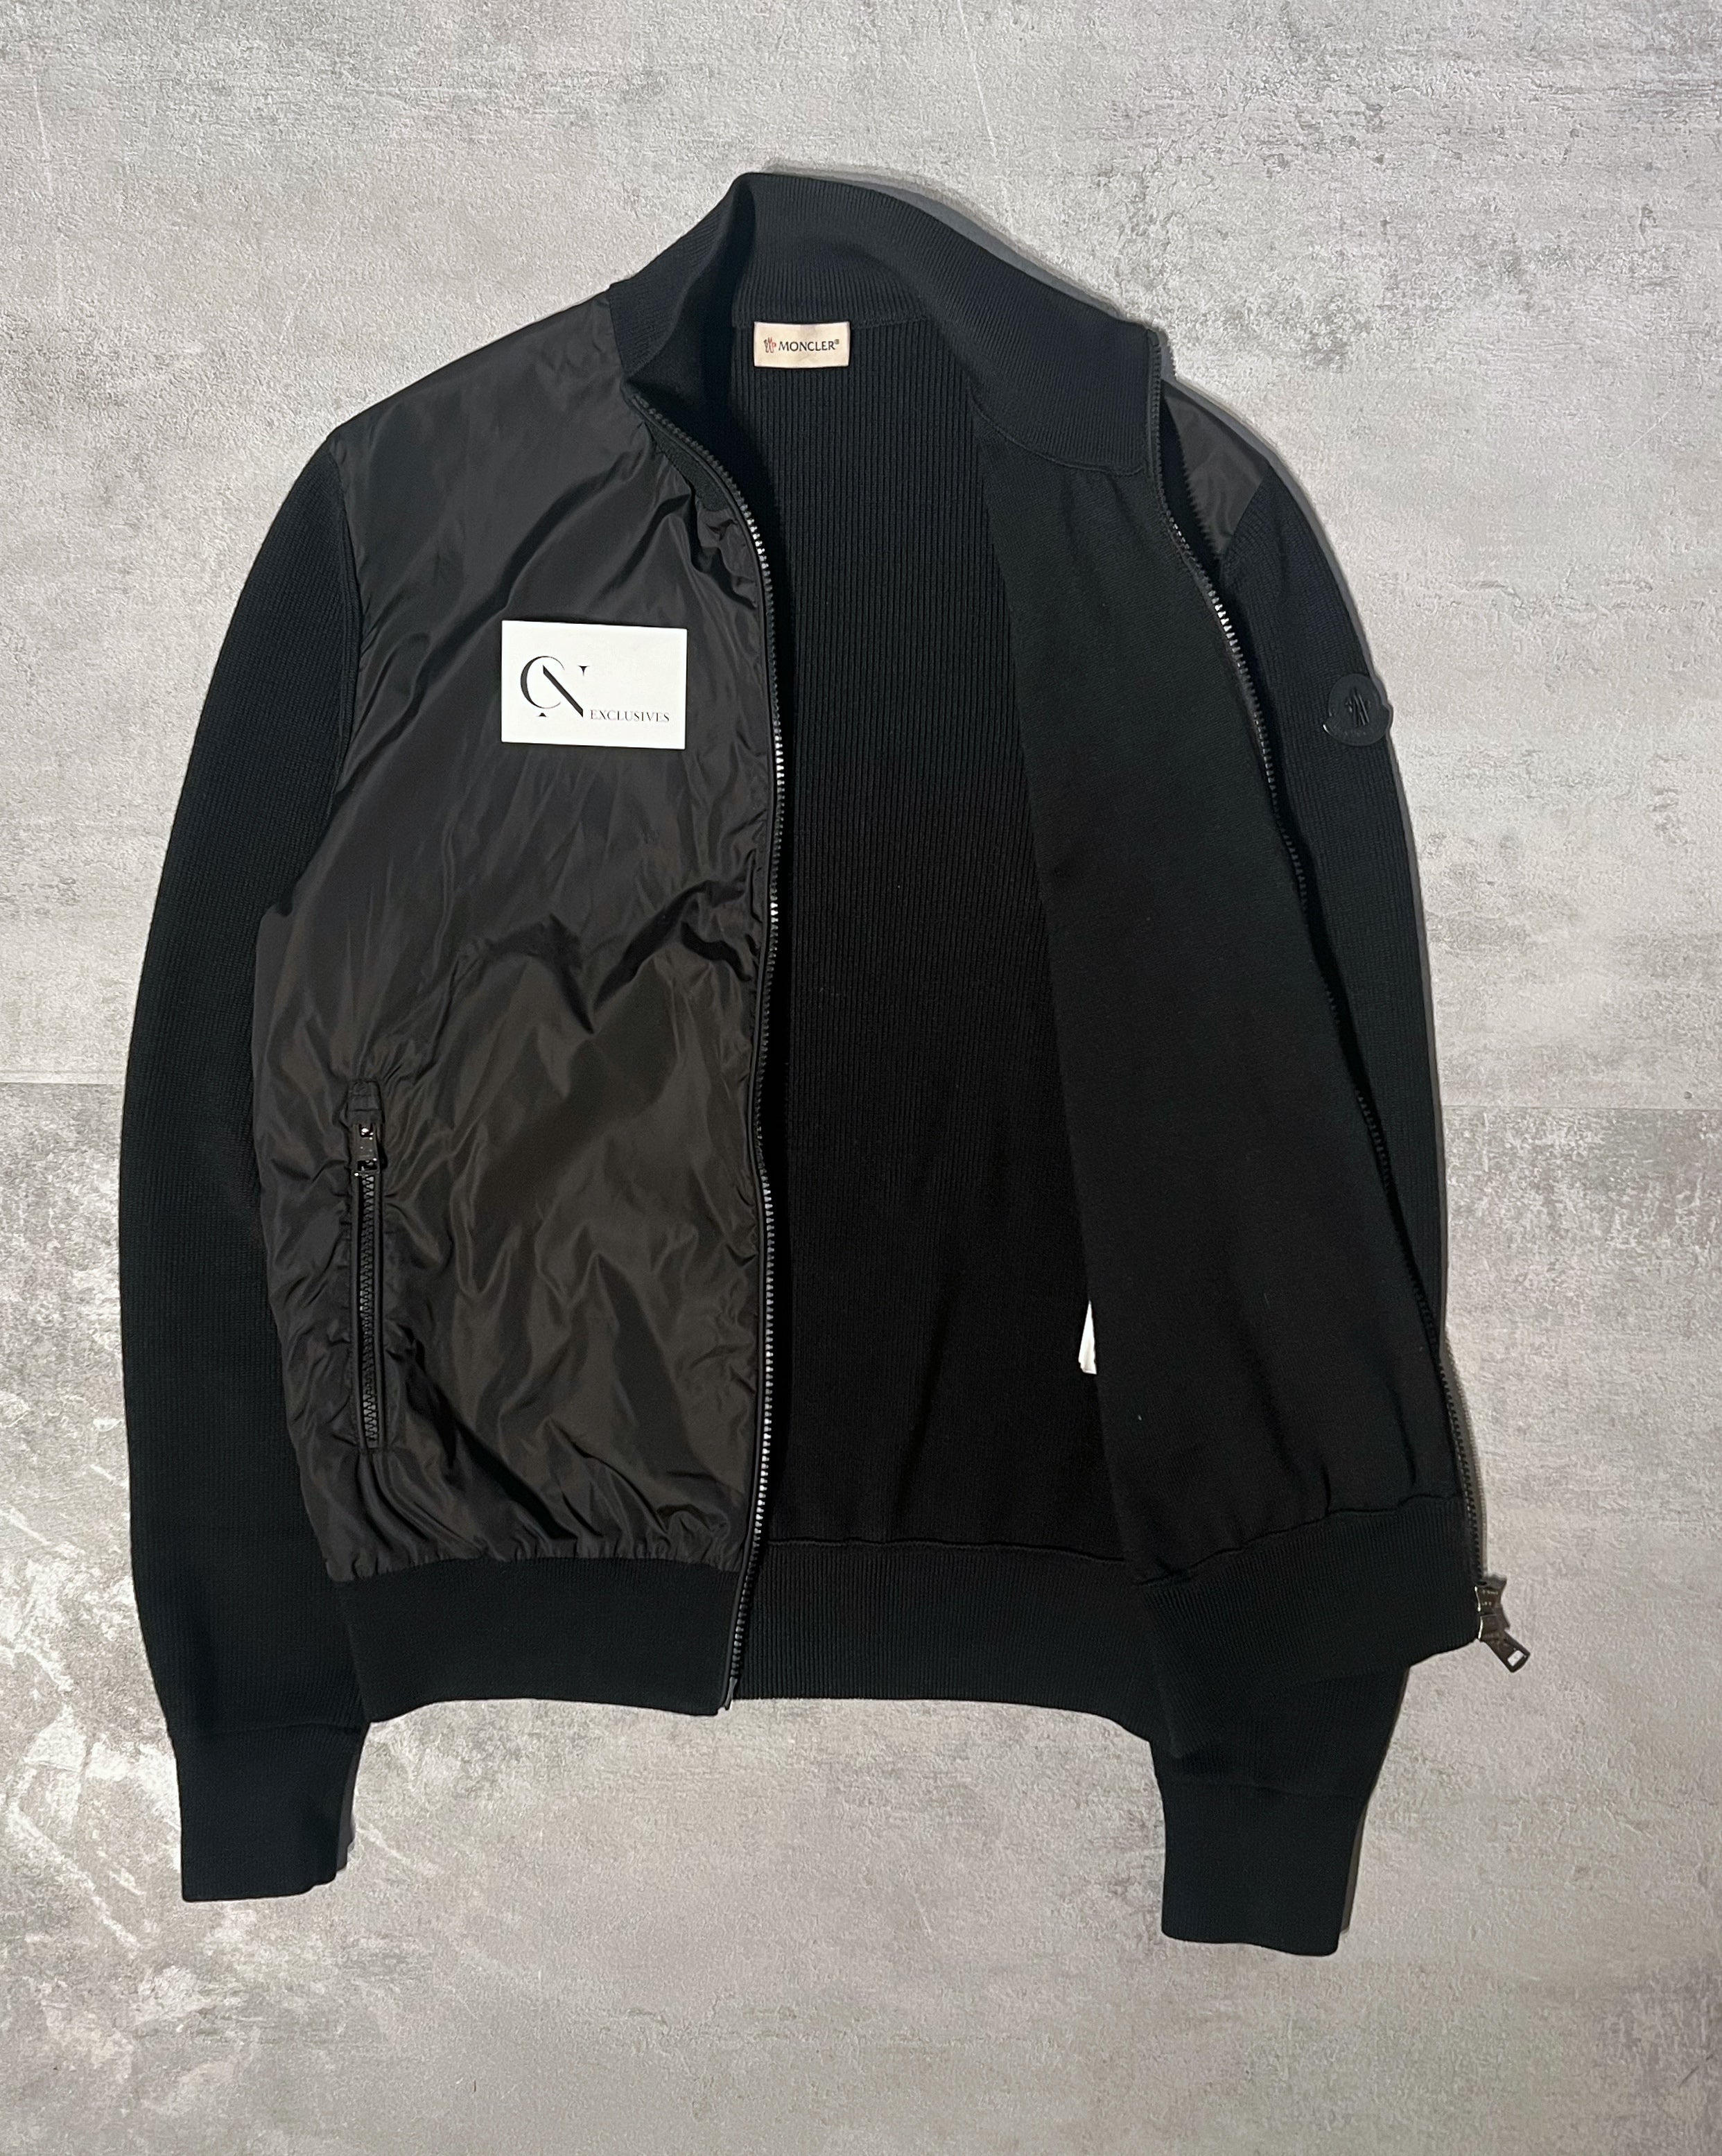 Moncler Black Label Cardigan - Size L